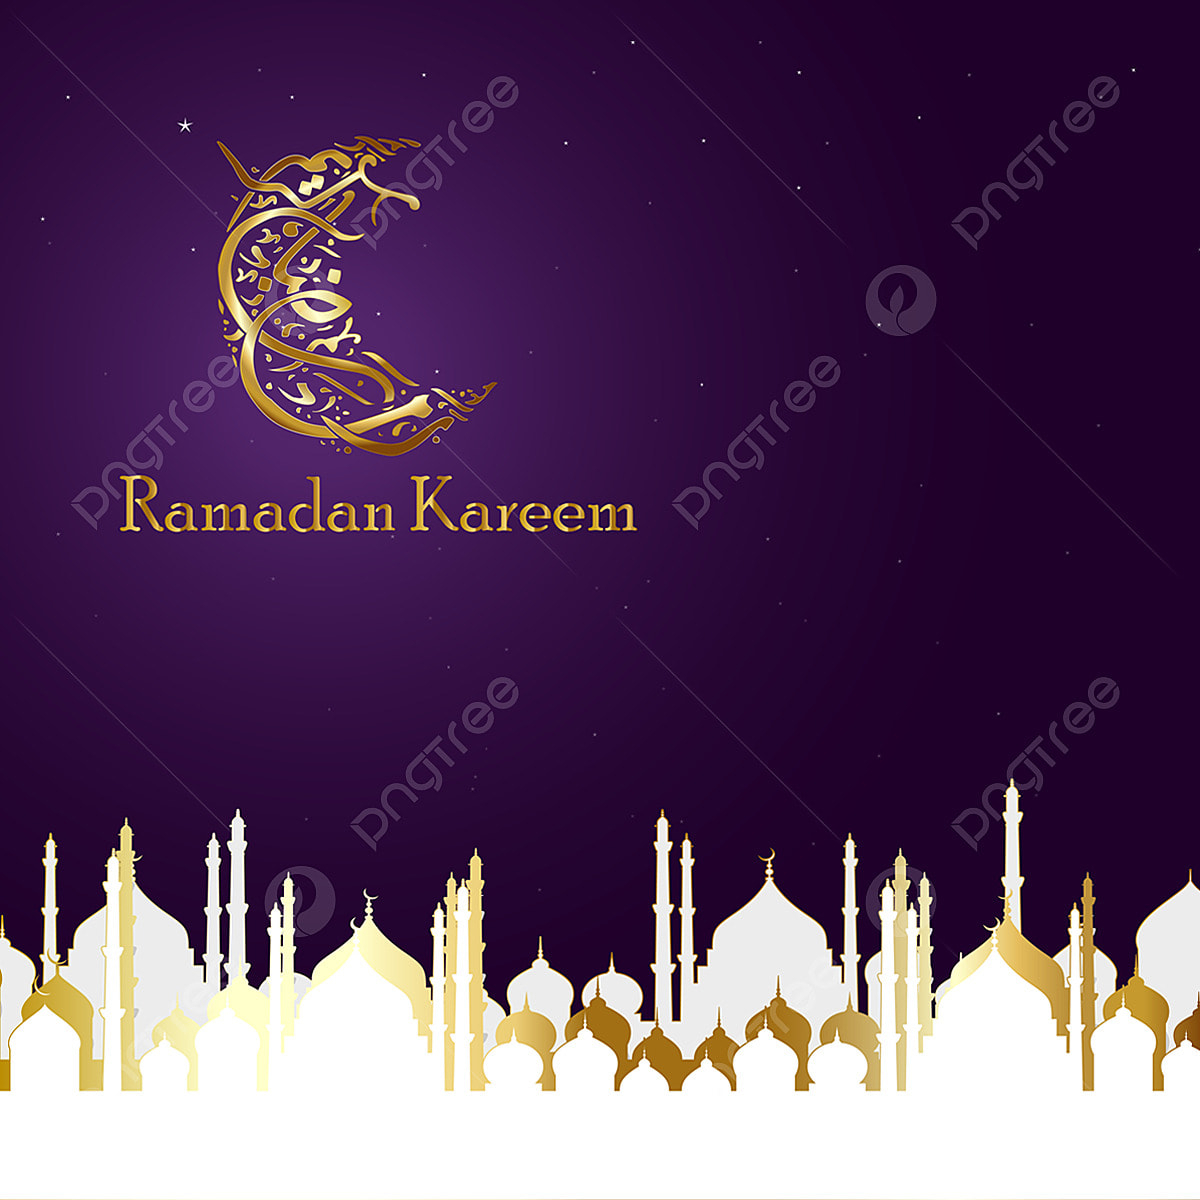 Gambar Ramadhan 2019